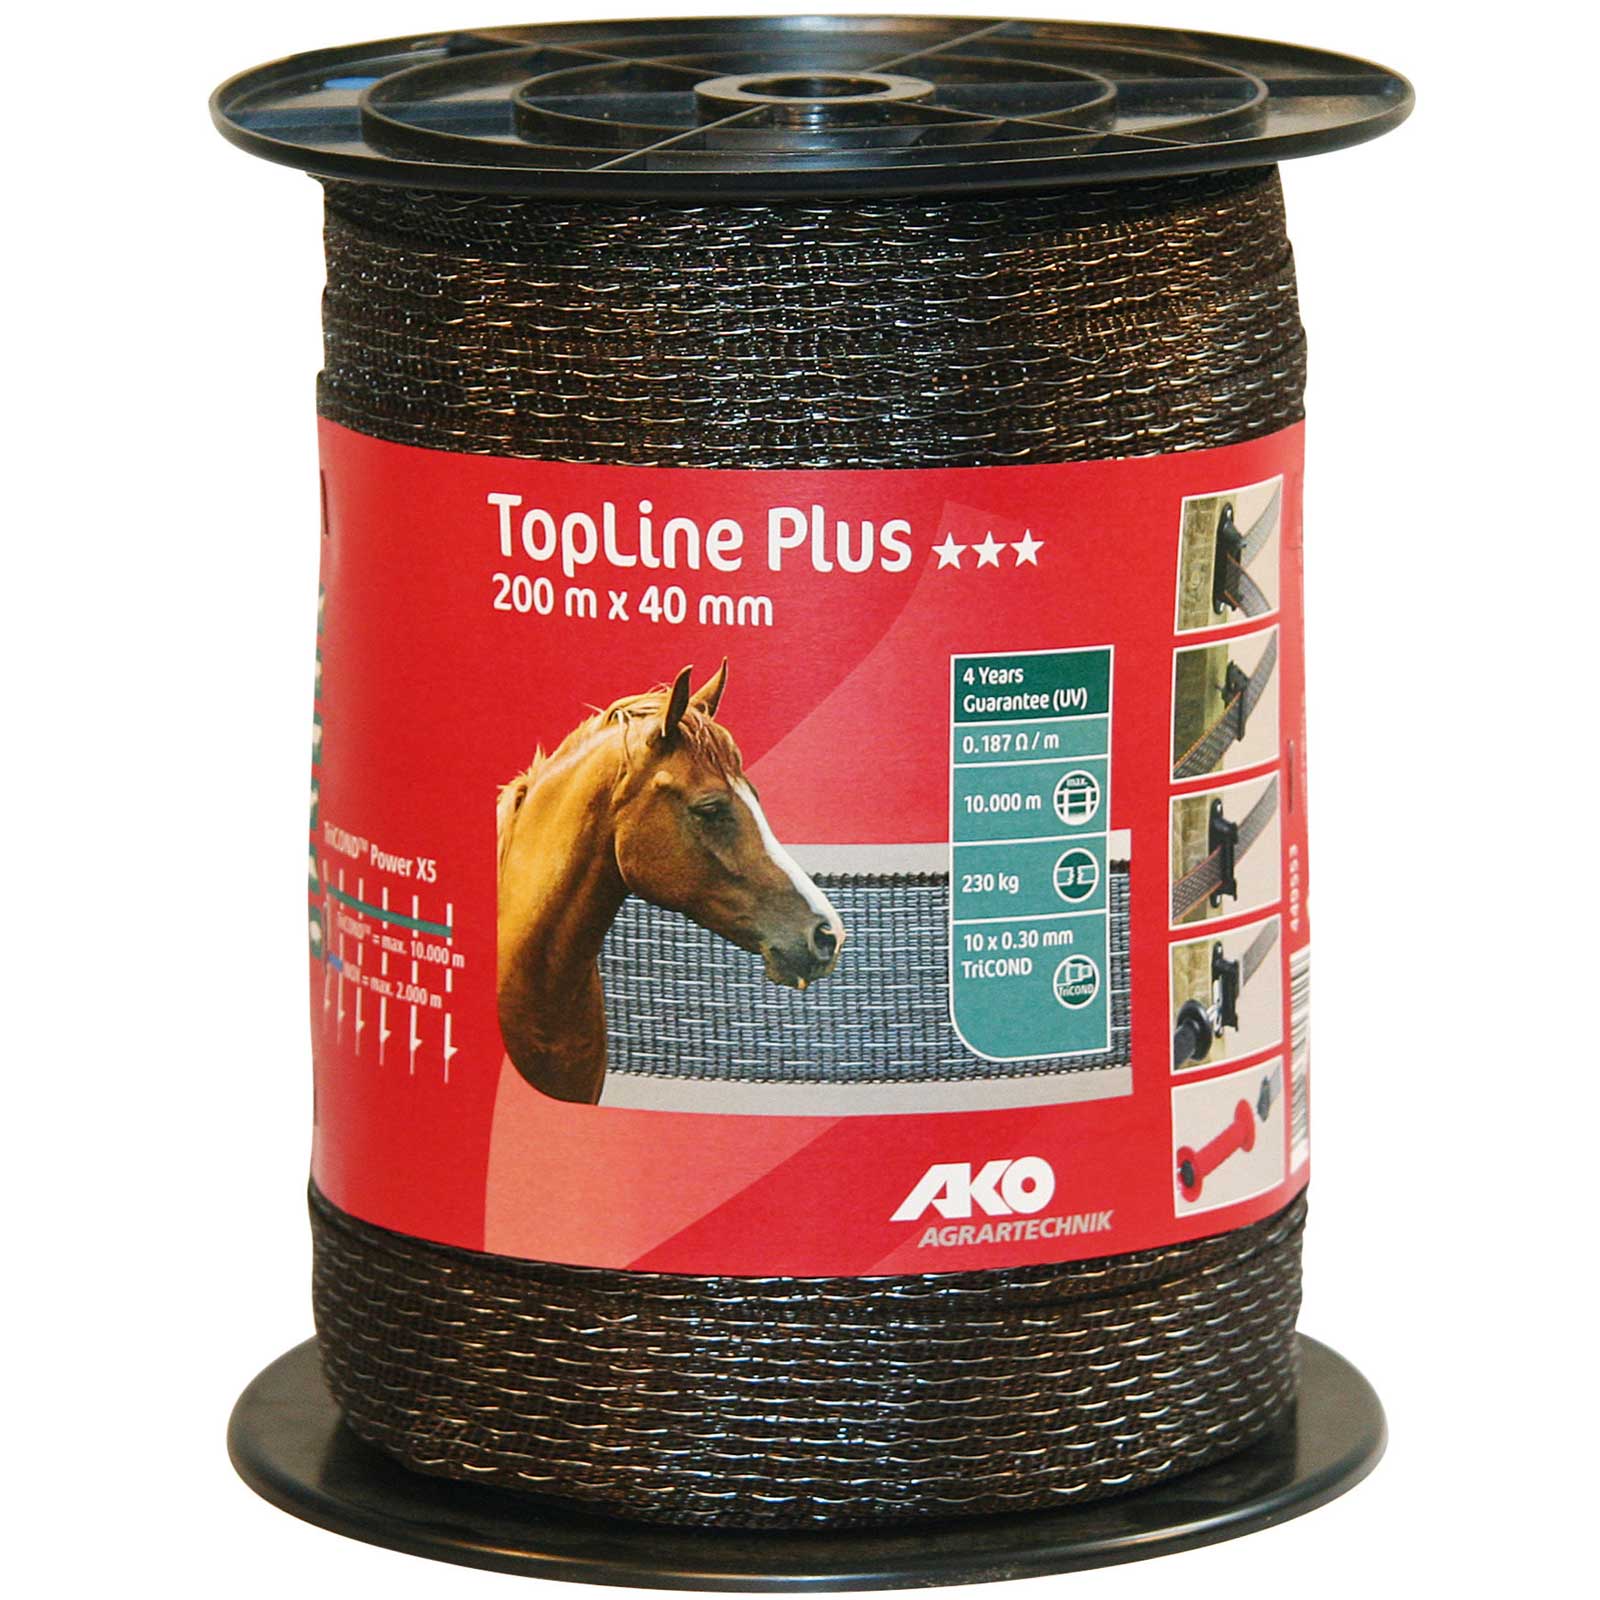 Ako Pasture Fence Tape TopLine Plus 200m, 40mm, 10x0.30 TriCOND, brown